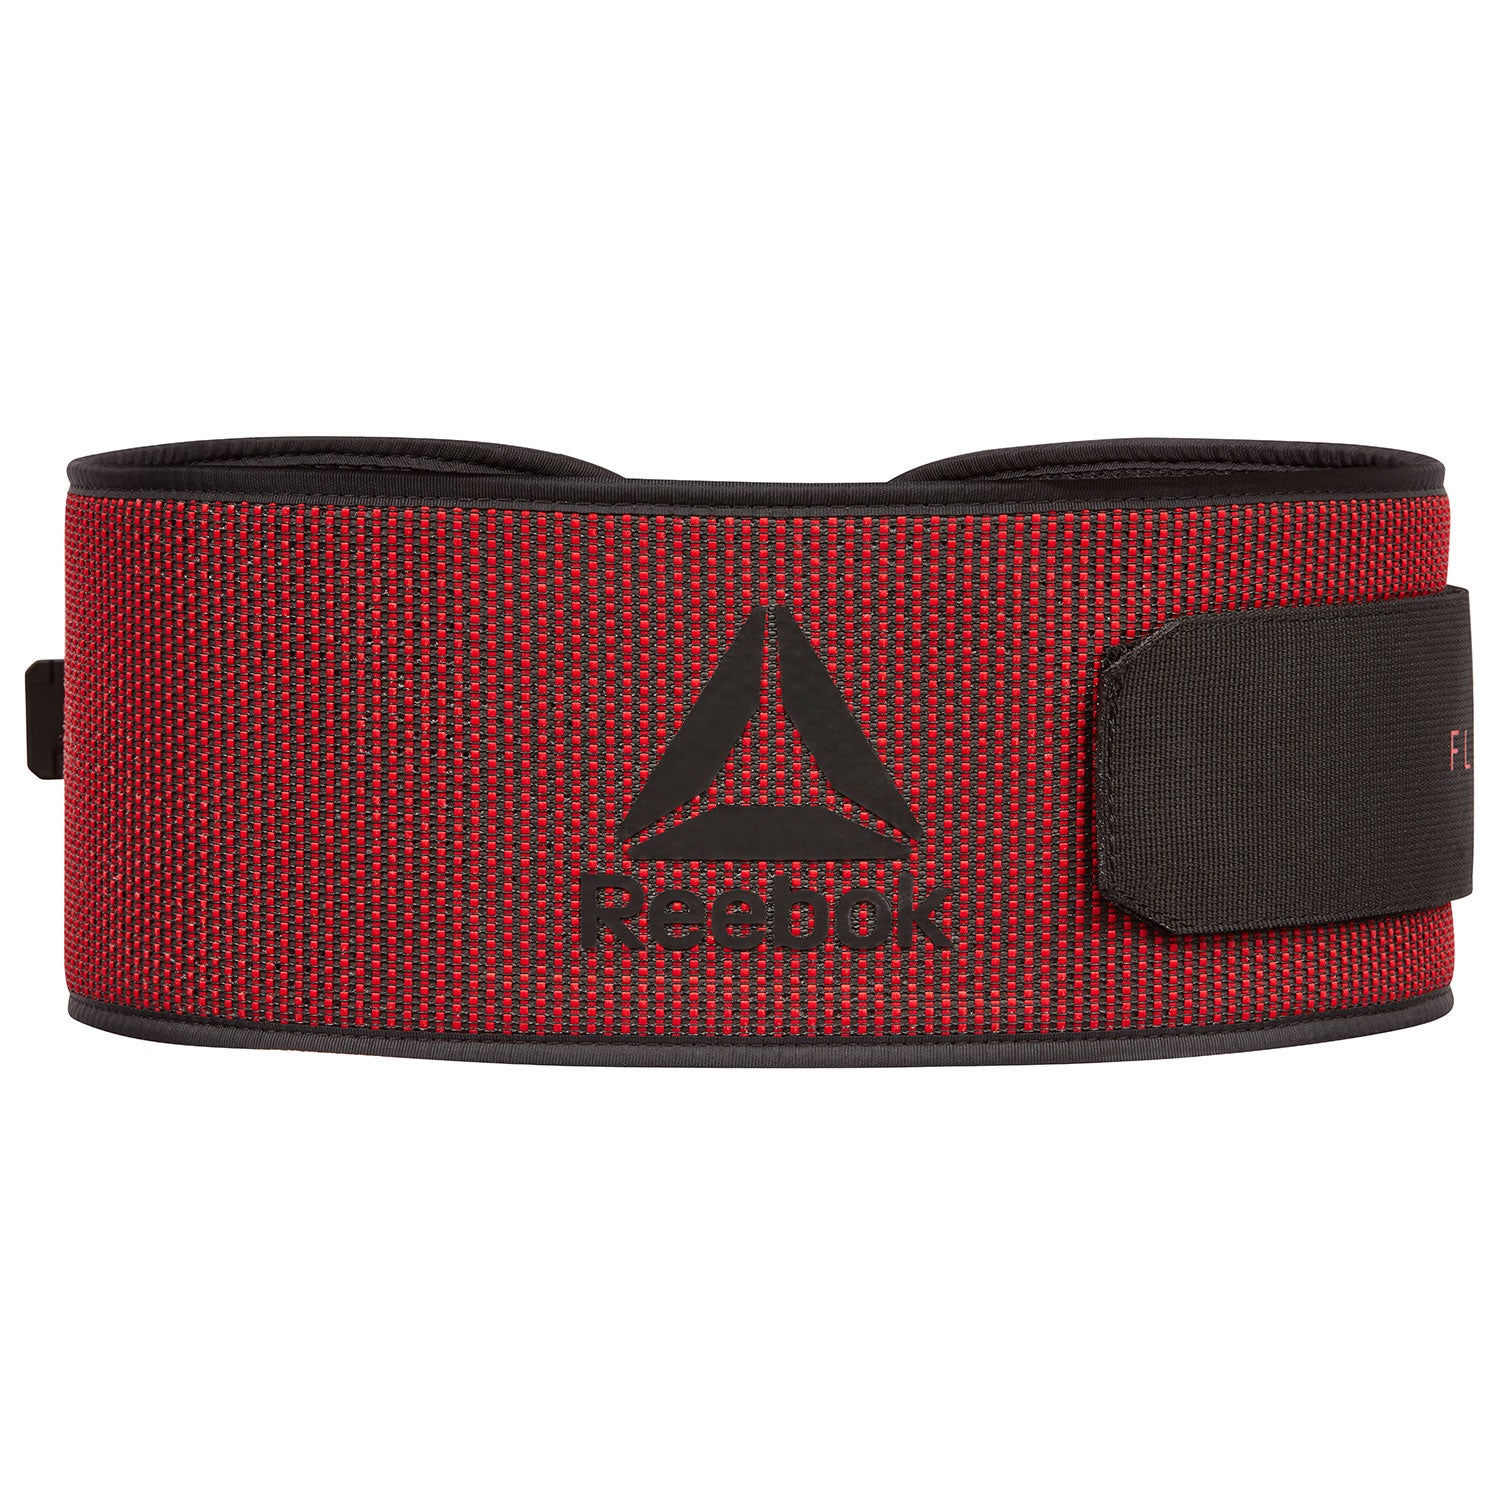 Reebok Flexweave Power Lifting Belt - Red/X-Large